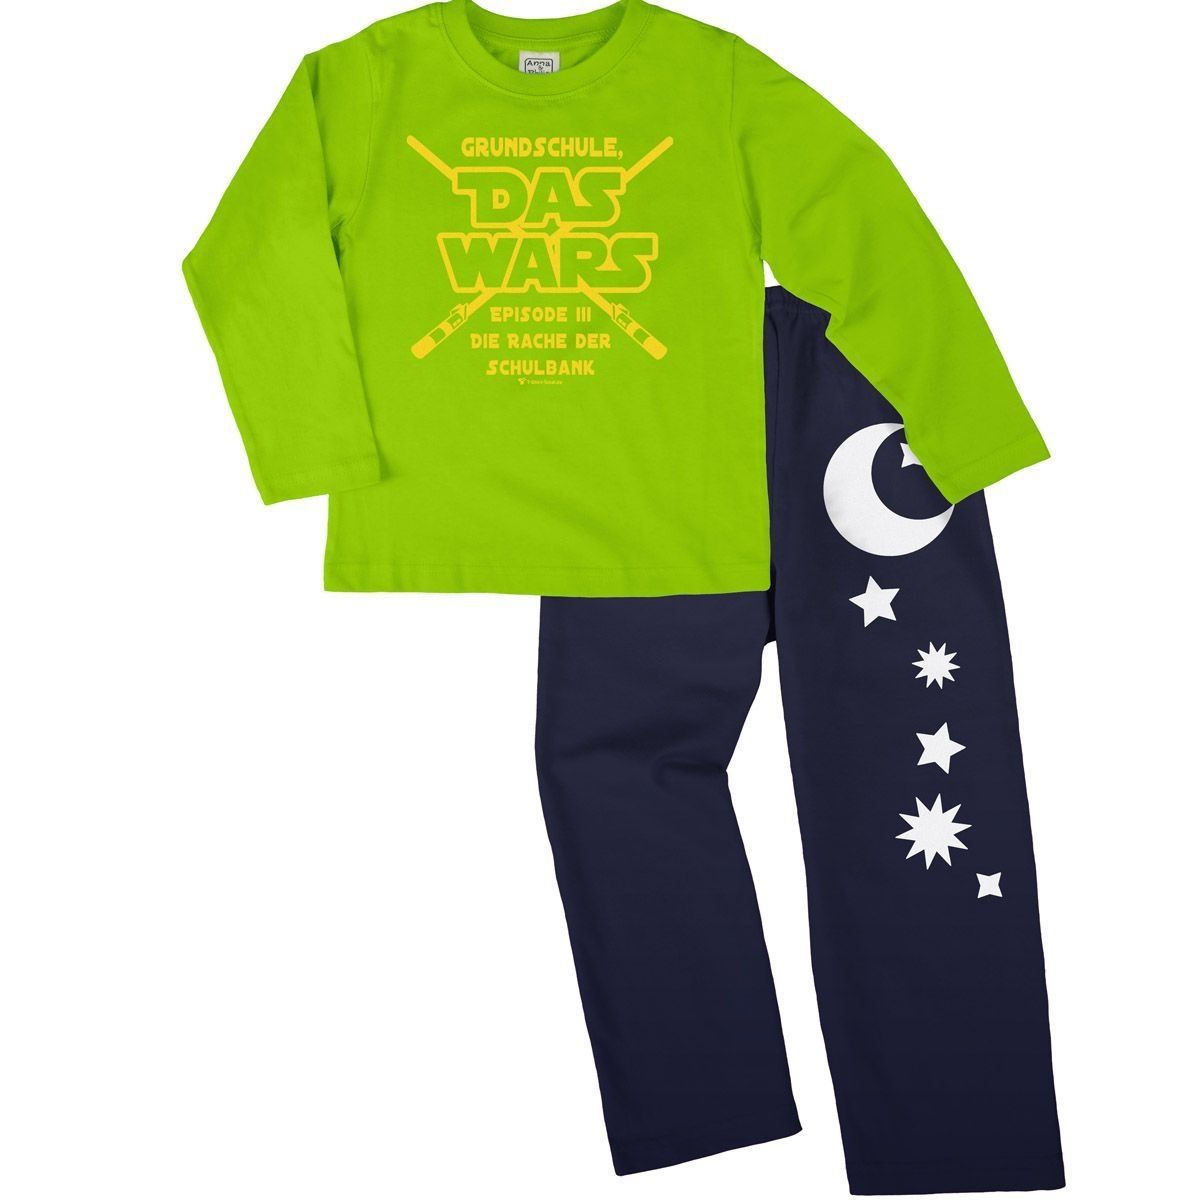 Das wars Grundschule Pyjama Set hellgrün / navy 134 / 140